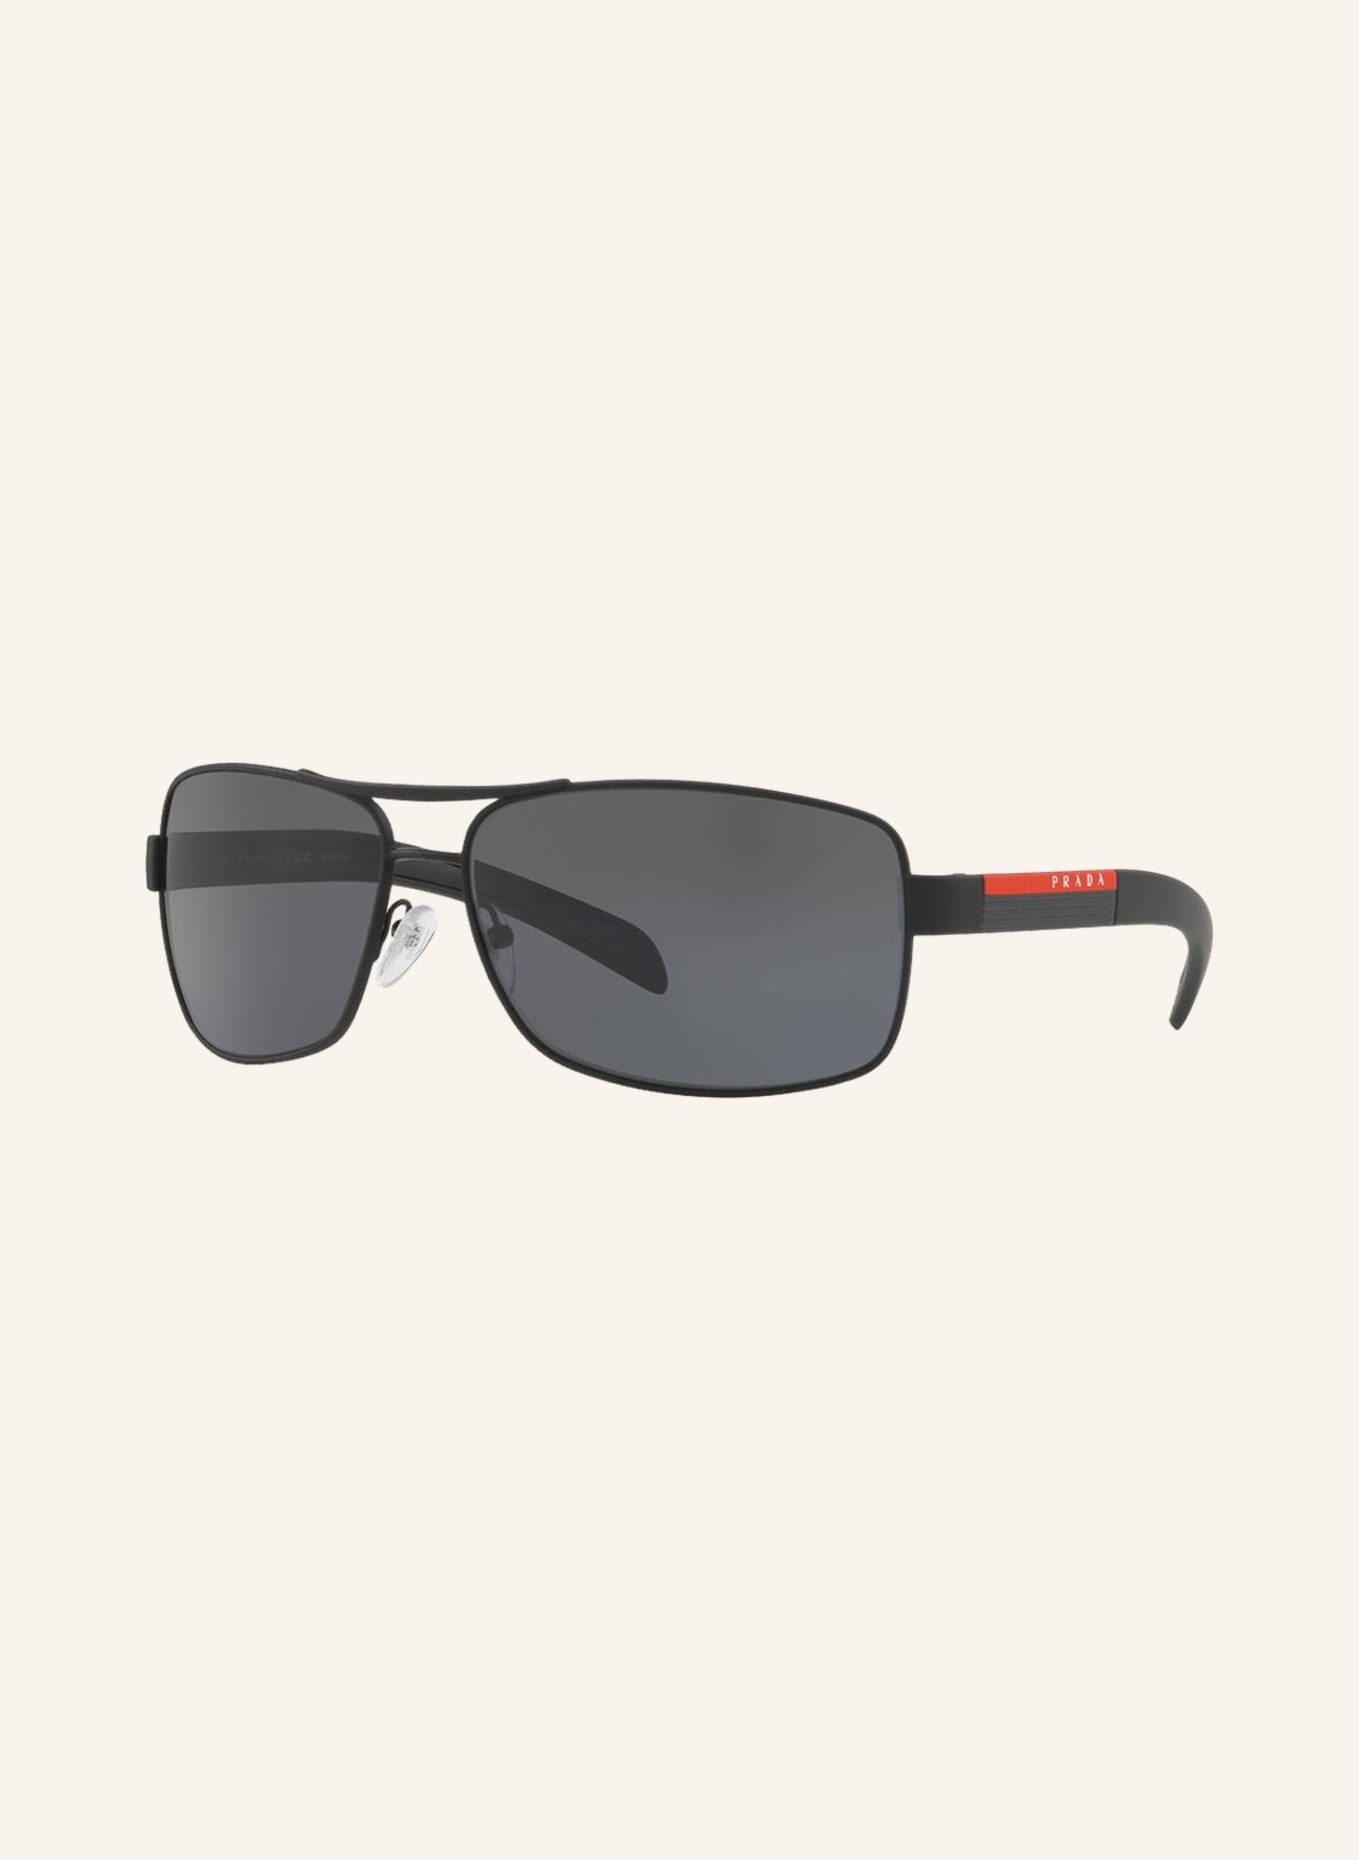 PRADA LINEA ROSSA Sunglasses PS 54IS in dg05z1 - black matte/ black |  Breuninger